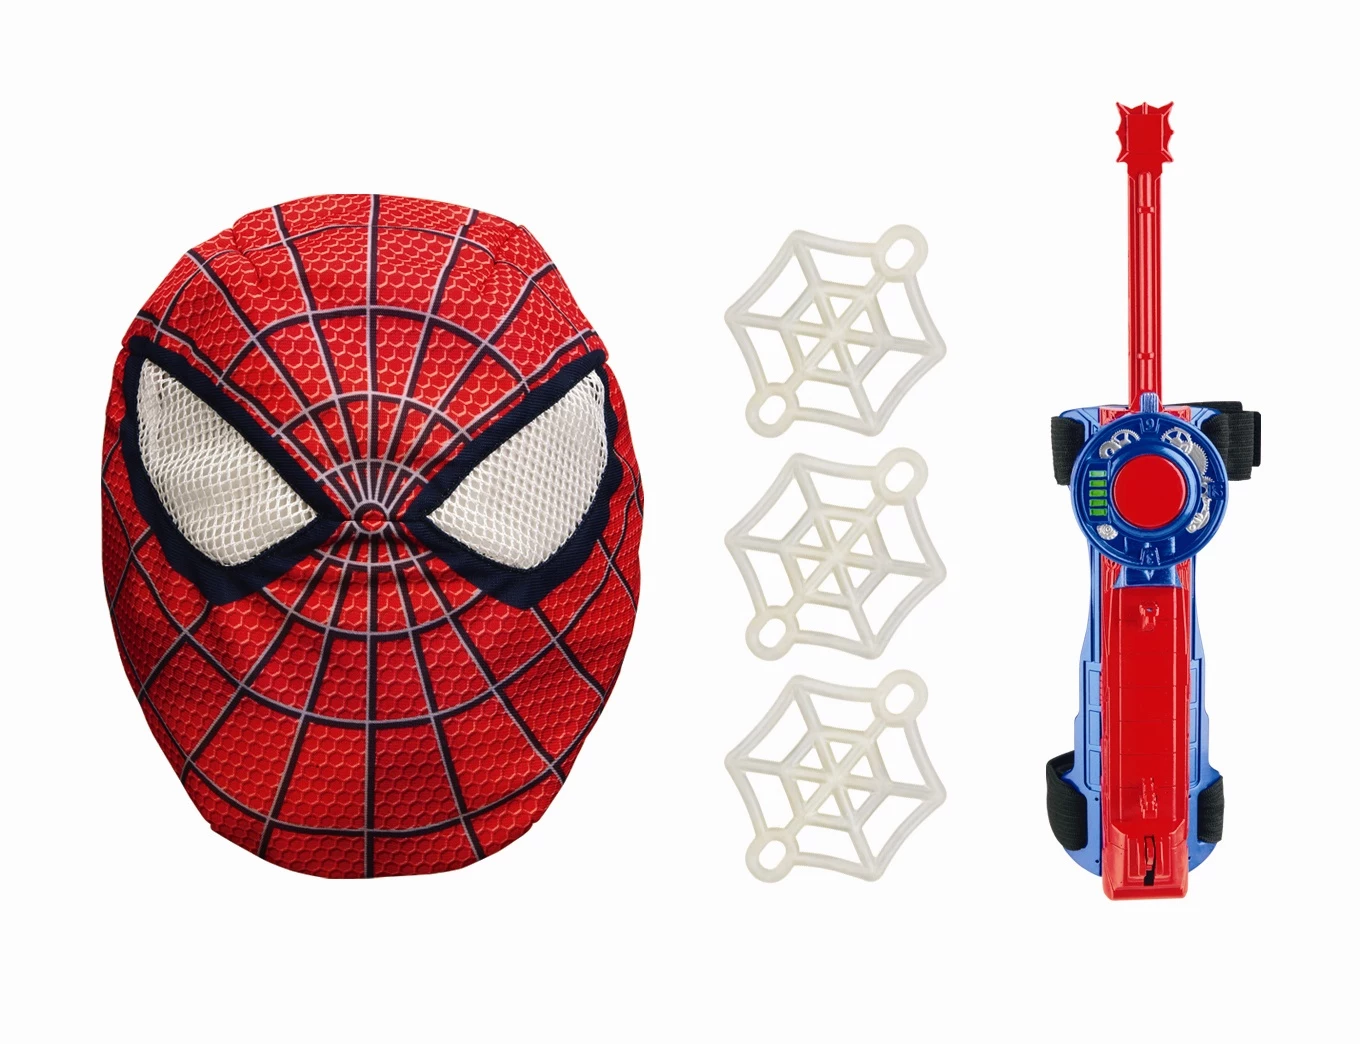 Webs toy. Веб шутер Хасбро Spider man. Игрушка шутер человека паука от Хасбро. Алтимейт человек паук веб шутер. Веб шутер человека паука игрушка.